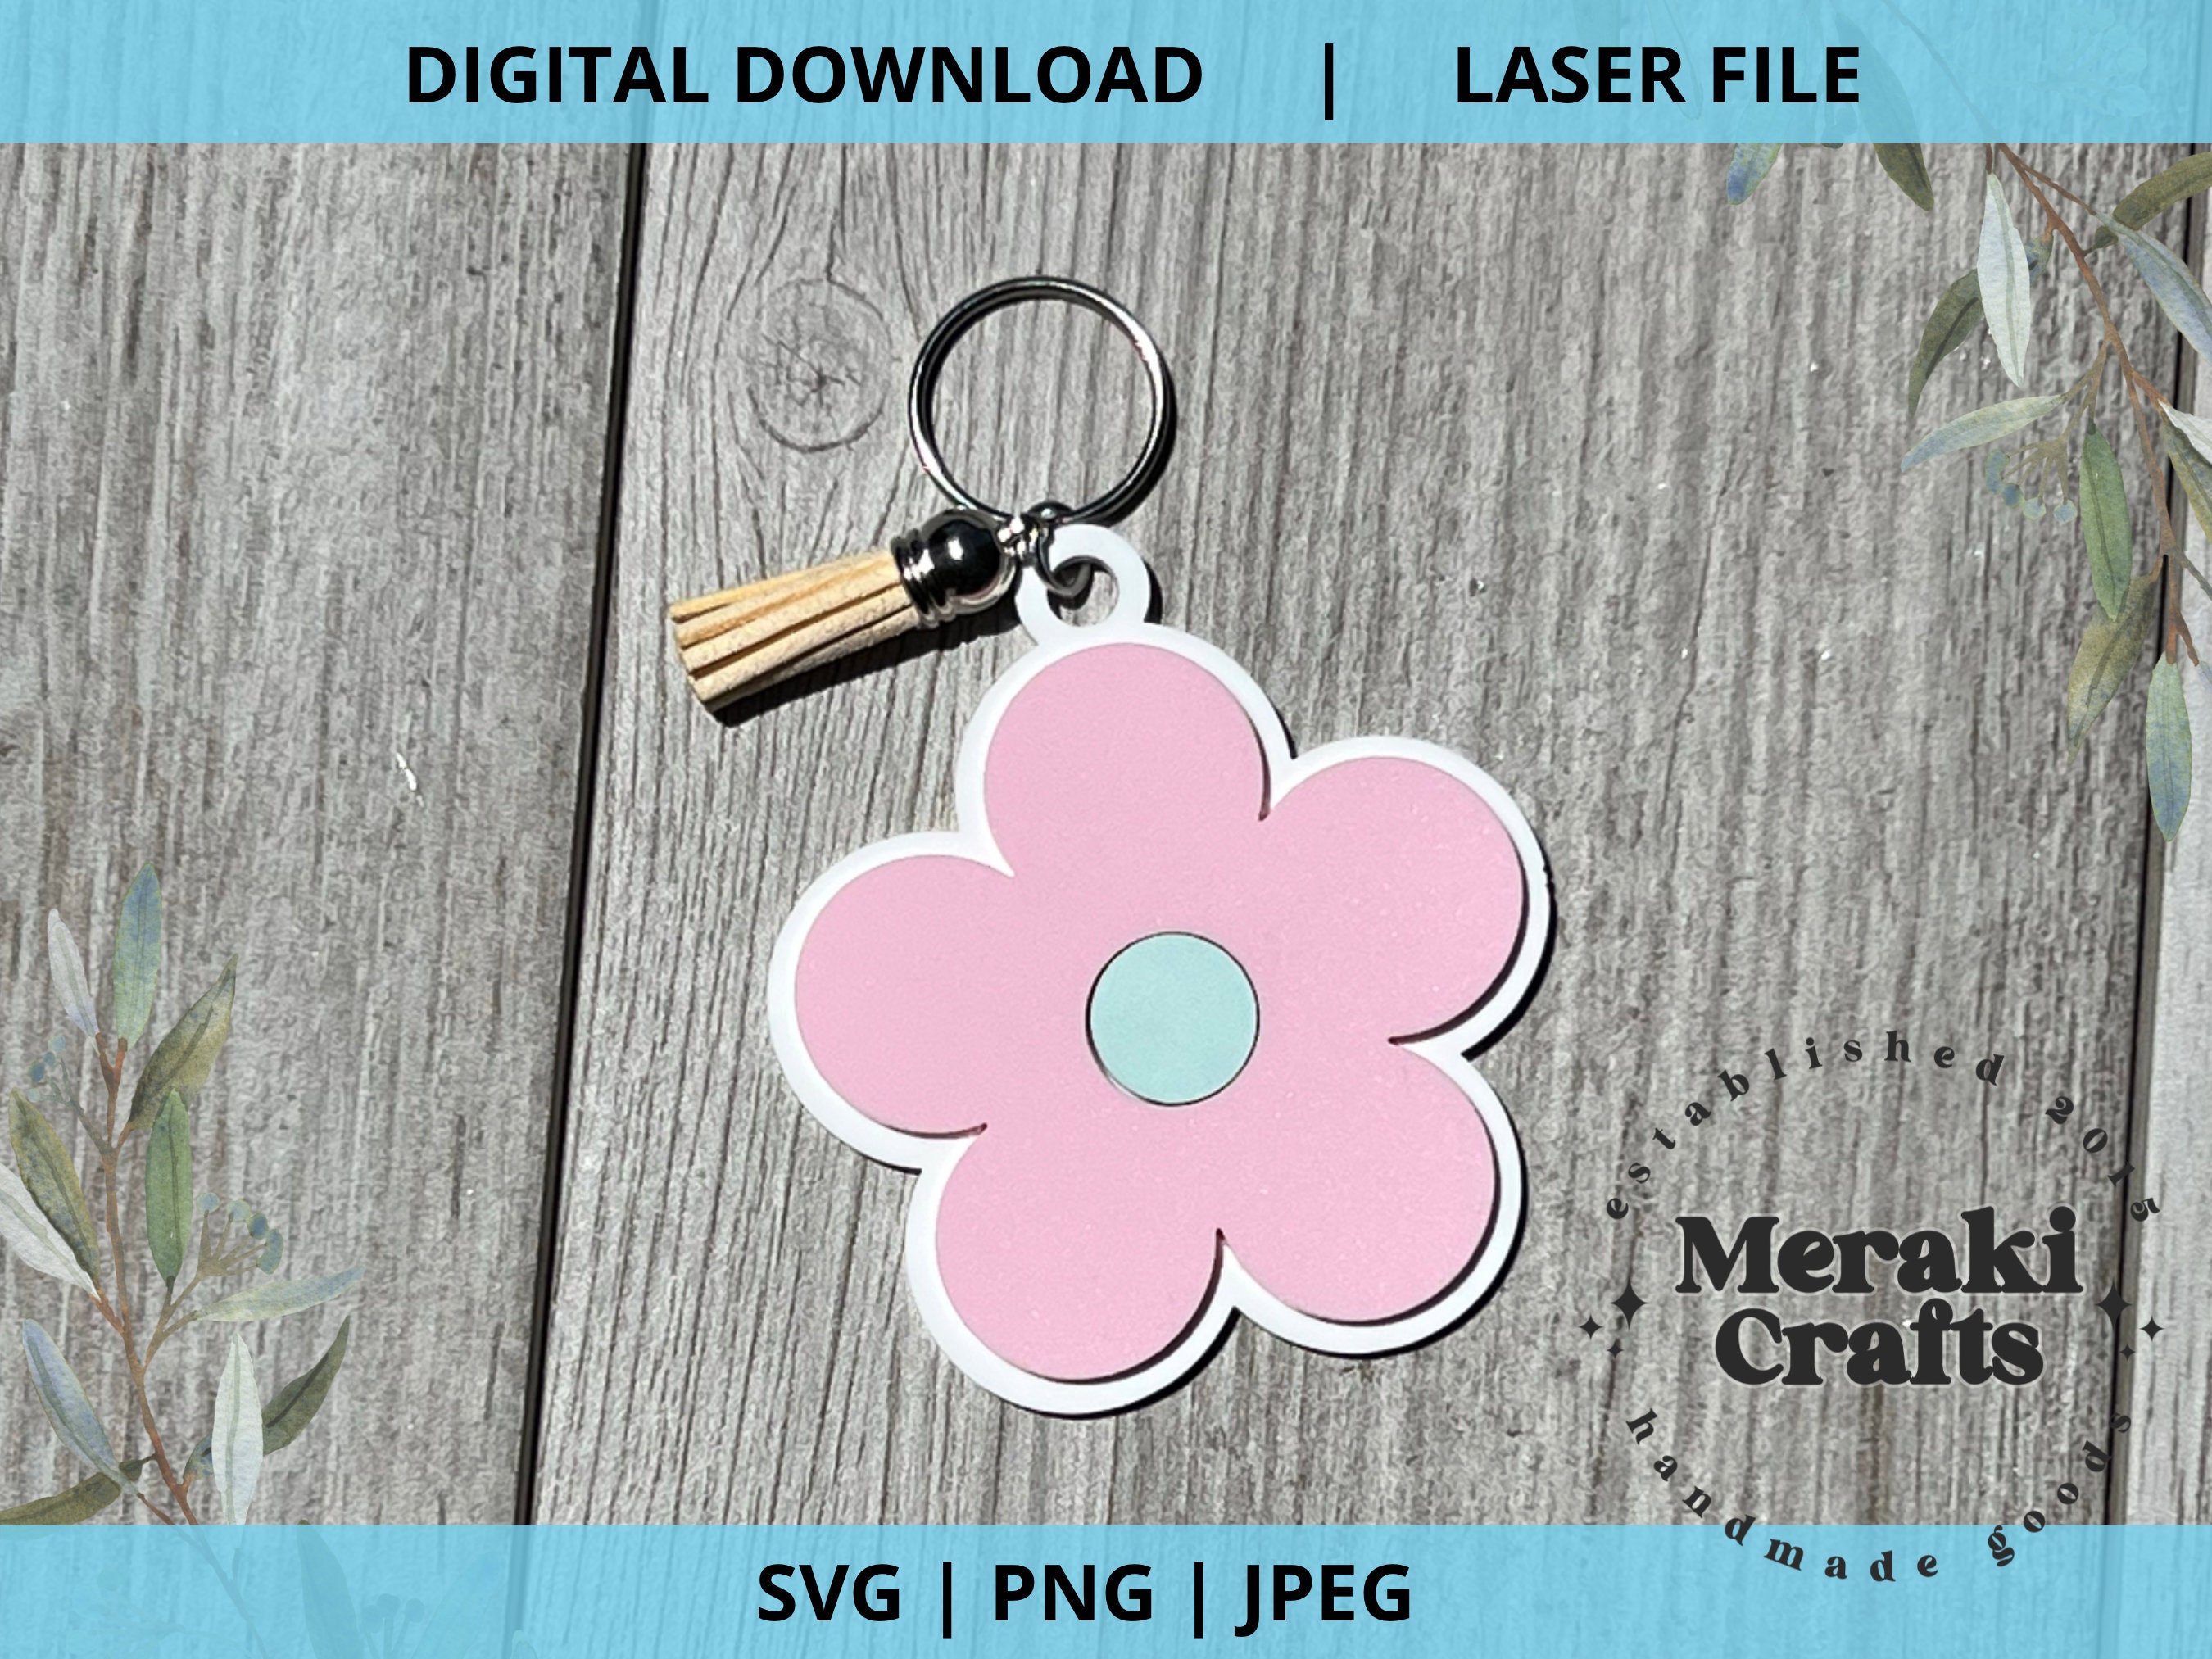 Elegant Daisy Flower Edition Personalized Acrylic Keychain – MissMomentos